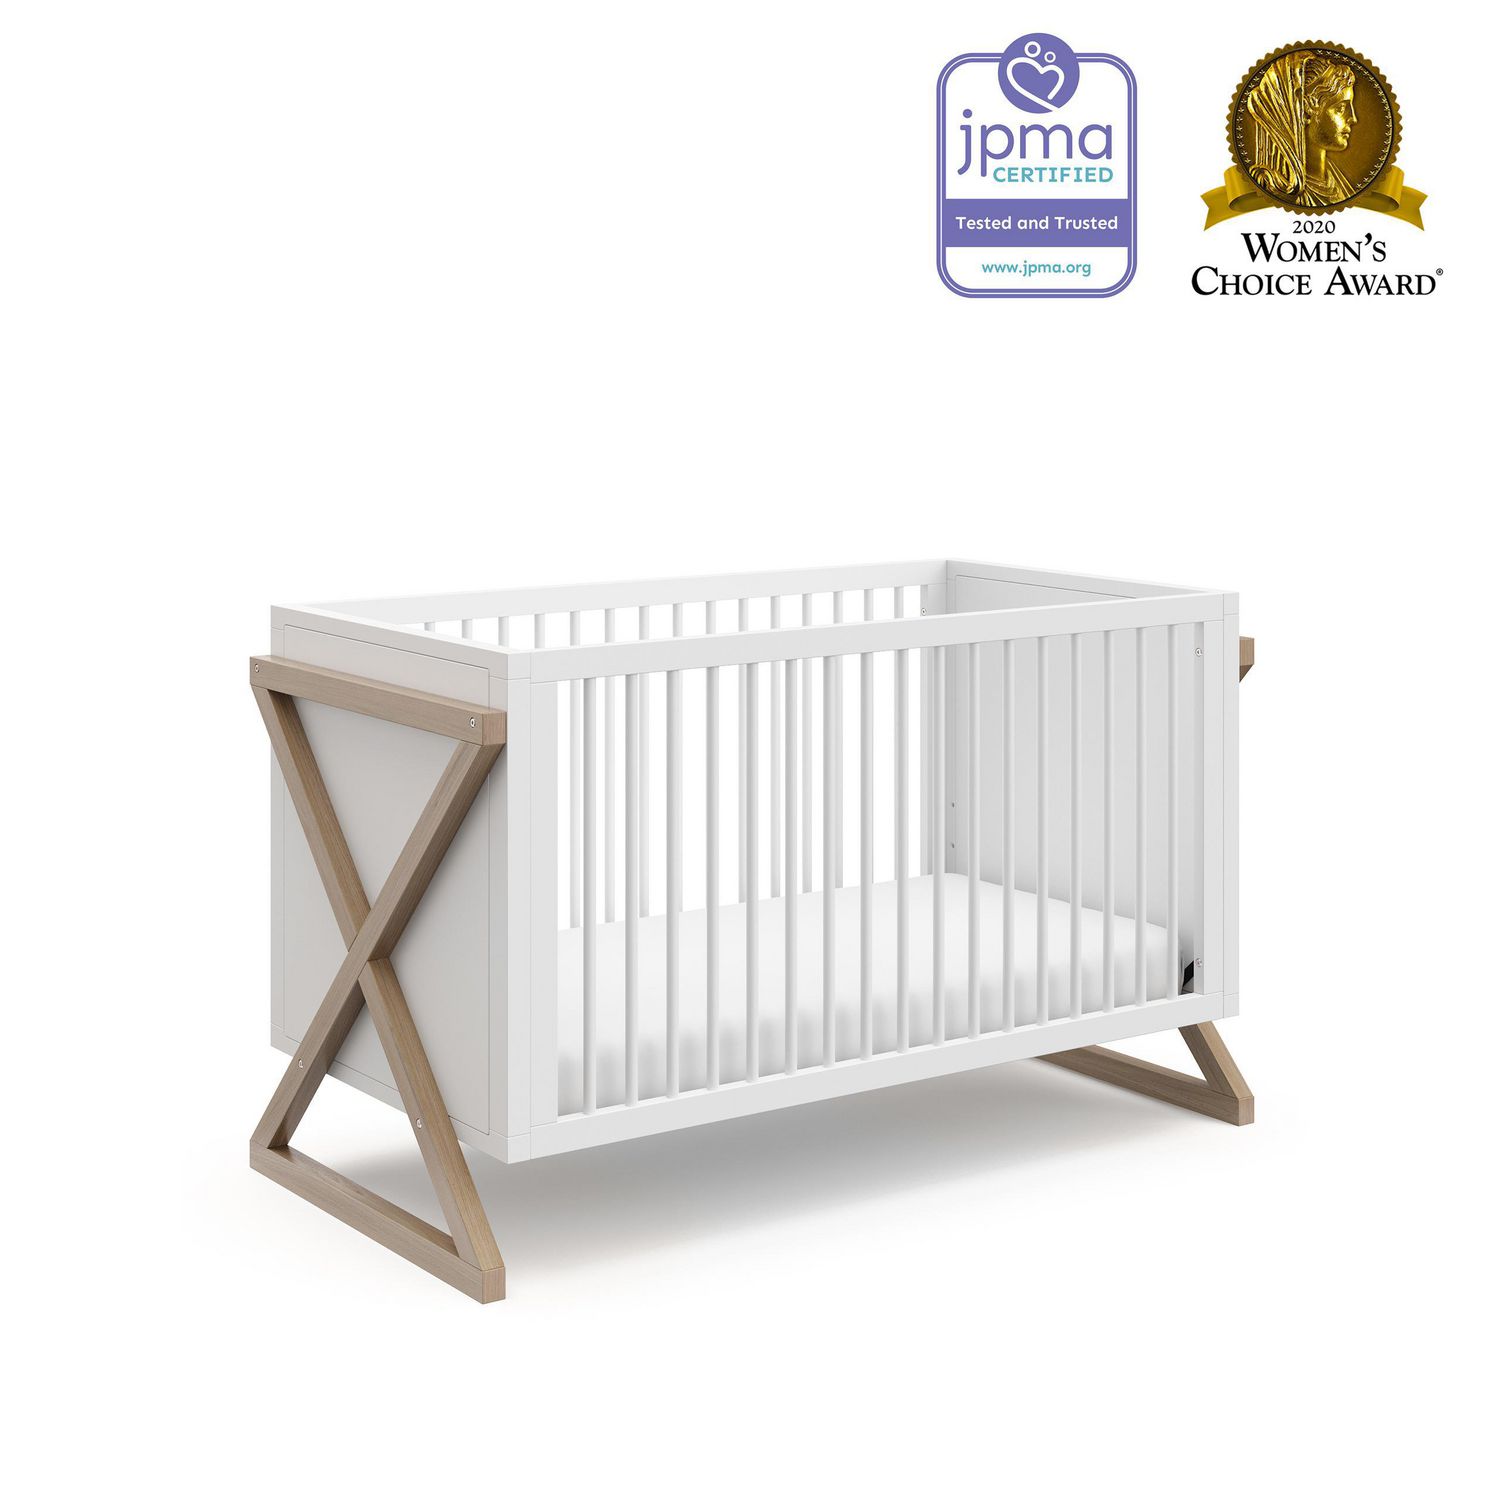 jpma certified cribs